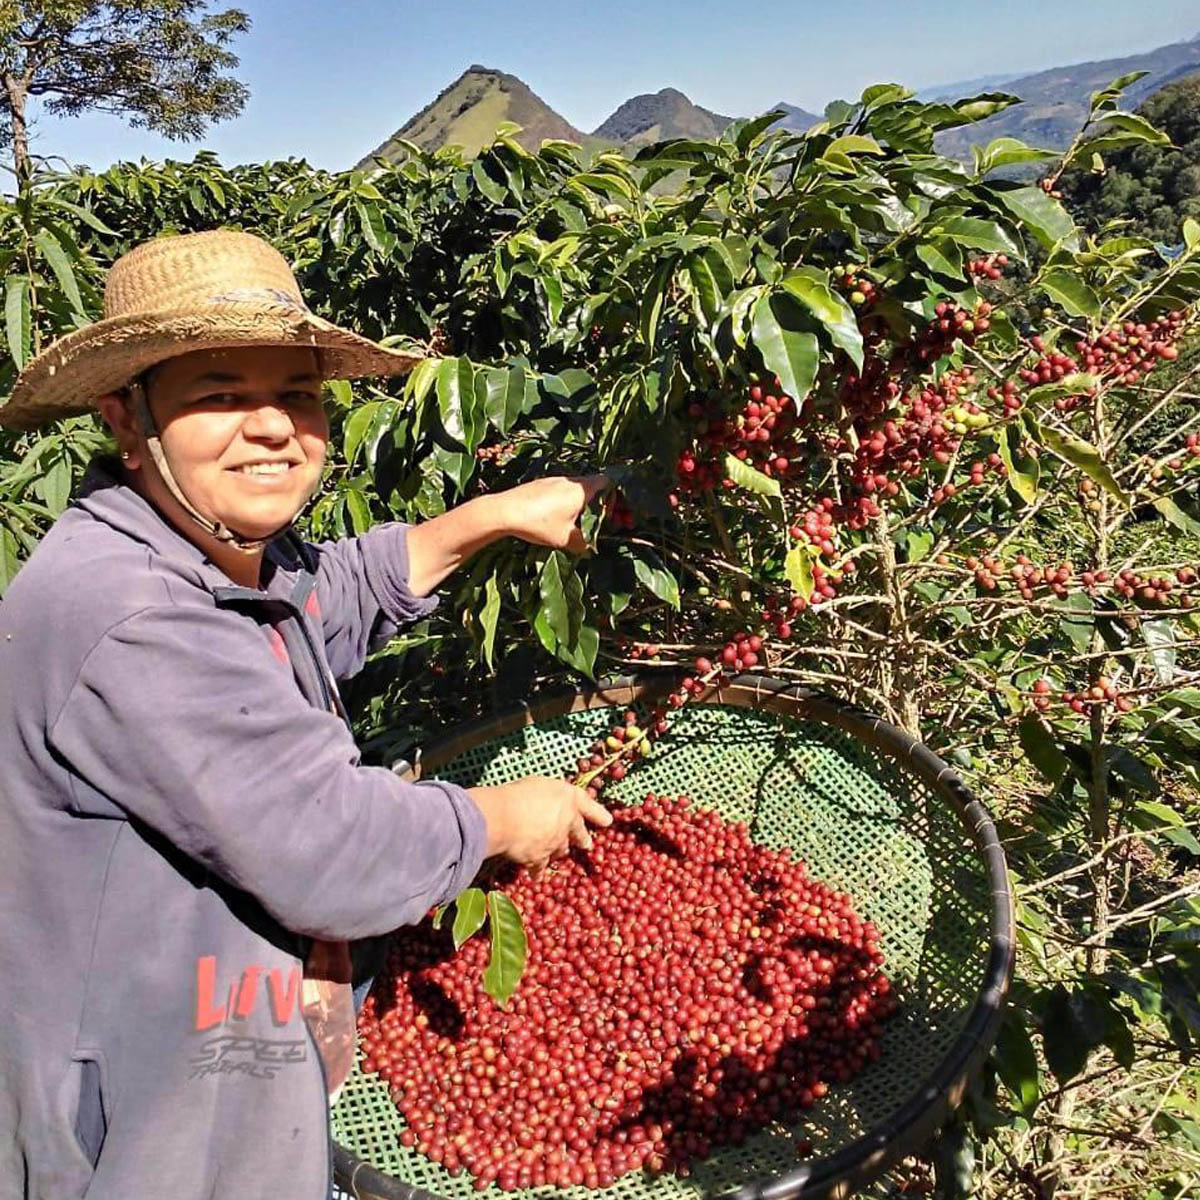 BRASILEÑA Organic Fair Trade Coffee Beans